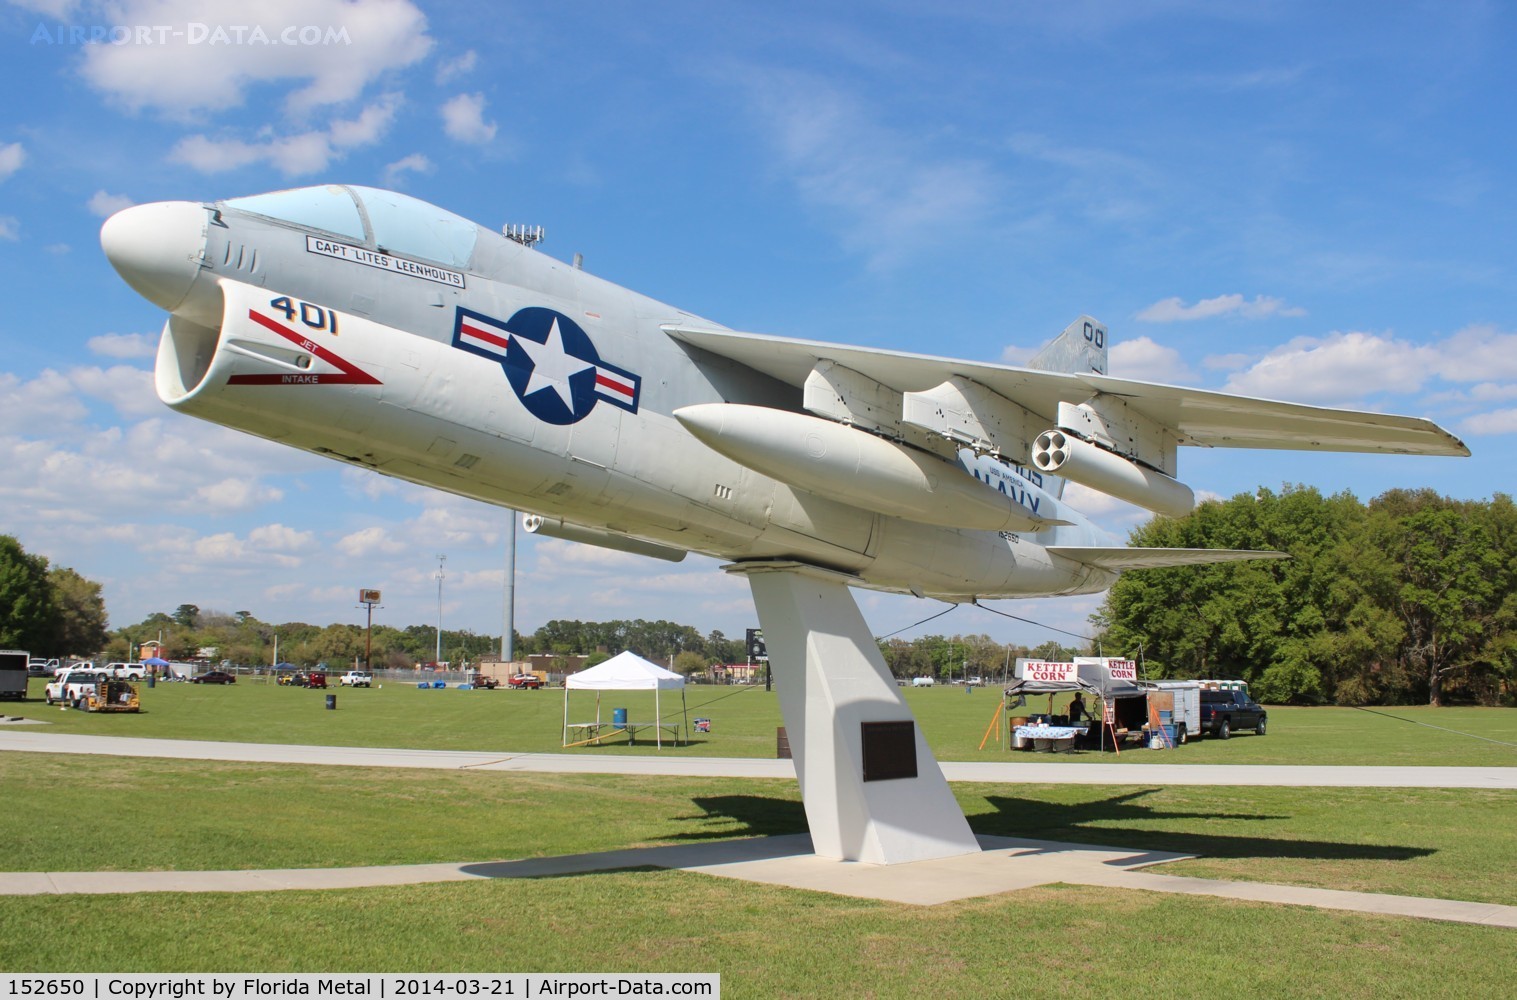 152650, LTV A-7A Corsair II C/N A-007, A-7A Corsair II in front of Don Garlitts Dragracing Museum near Ocala FL